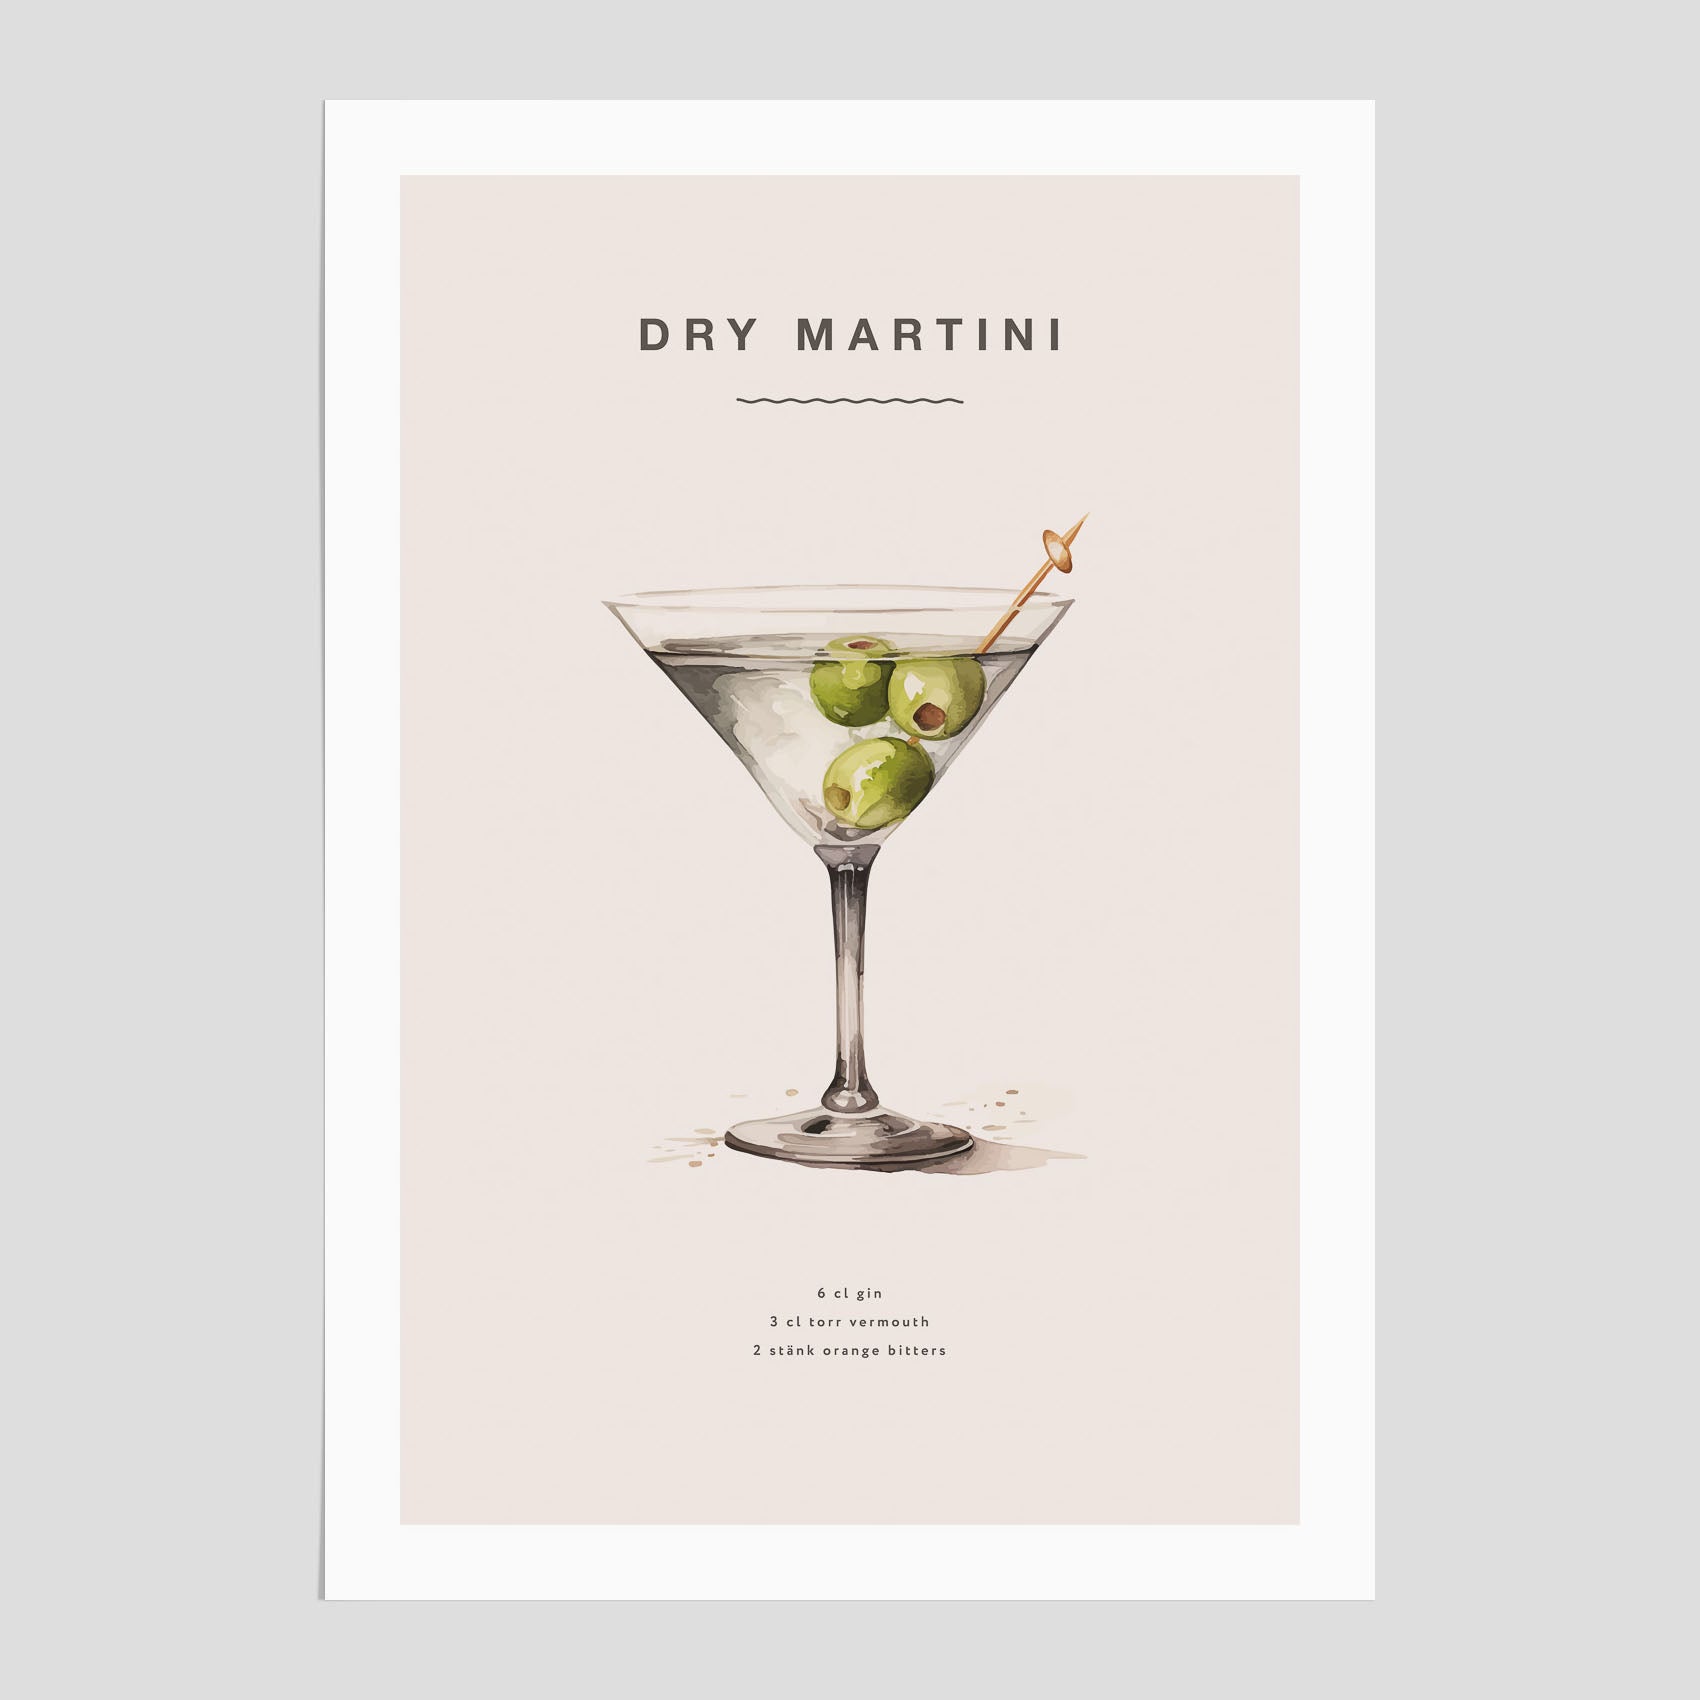 Dry Martini Poster – Affisch med drink, drinkposter med cocktail, Dry Martini recept poster